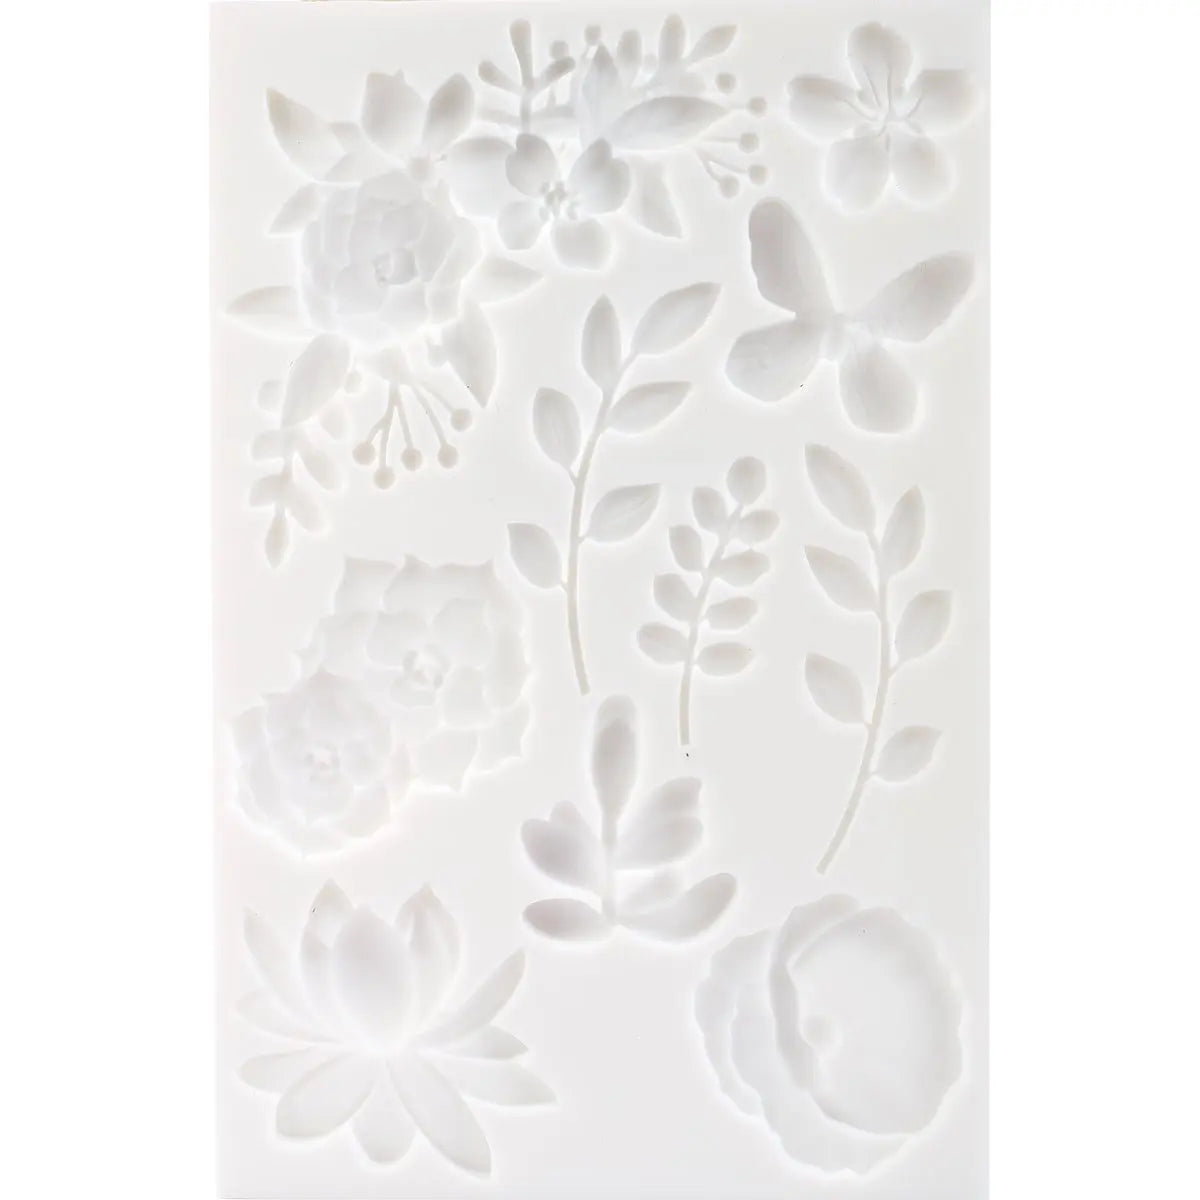 Graine creative siliconen vorm bloemen 20x13cm handgemaakteskincare